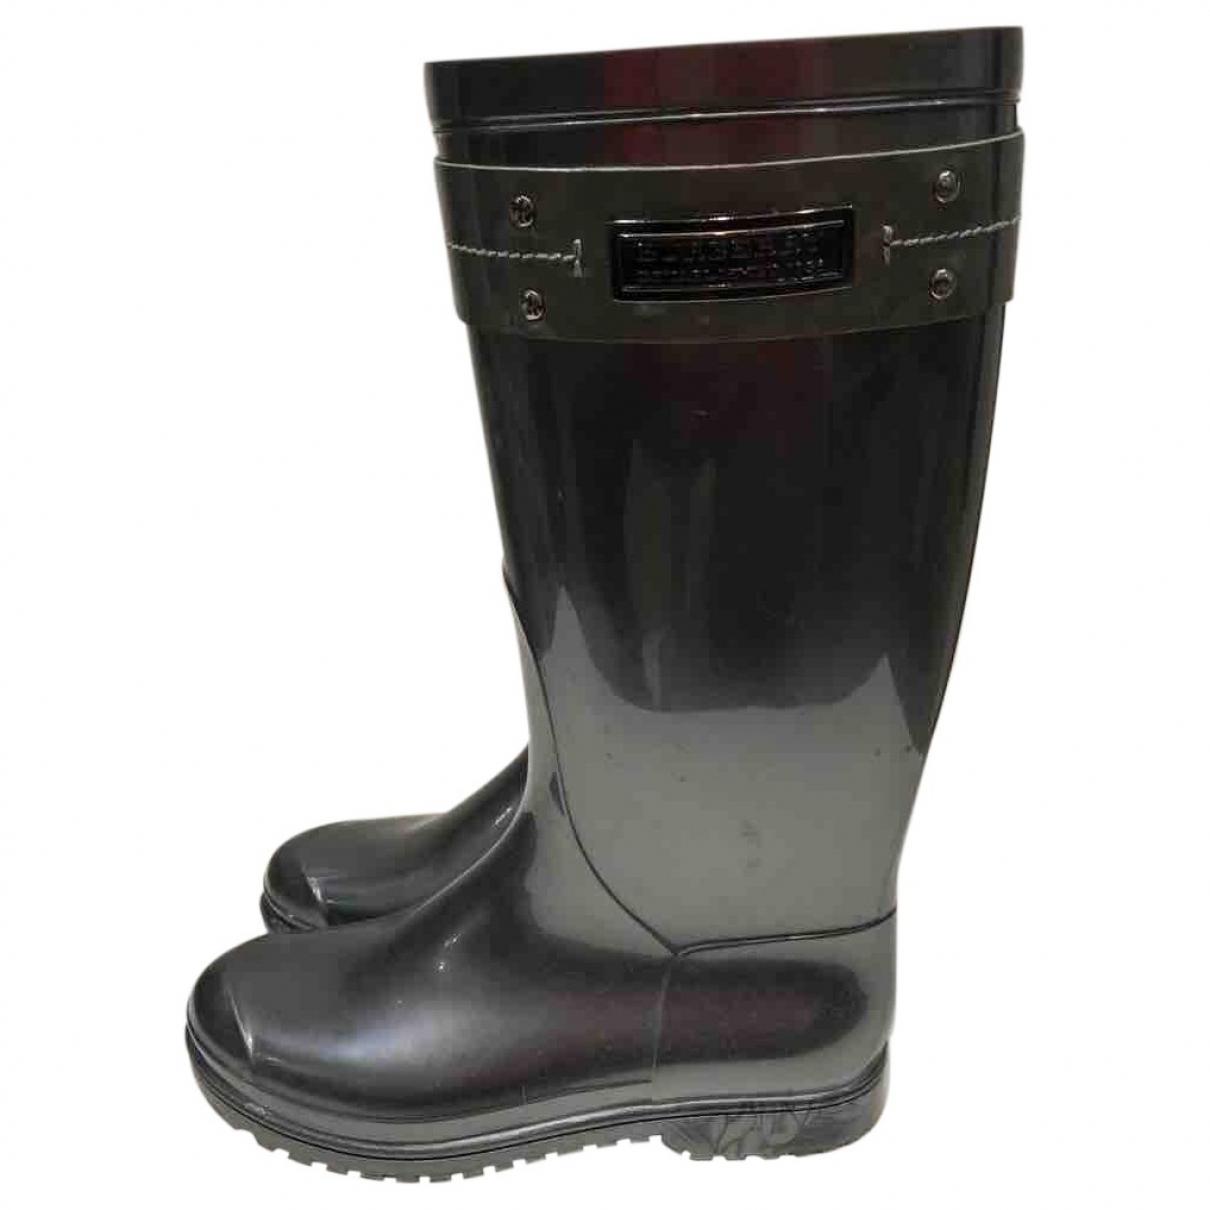 burberry rain boots silver